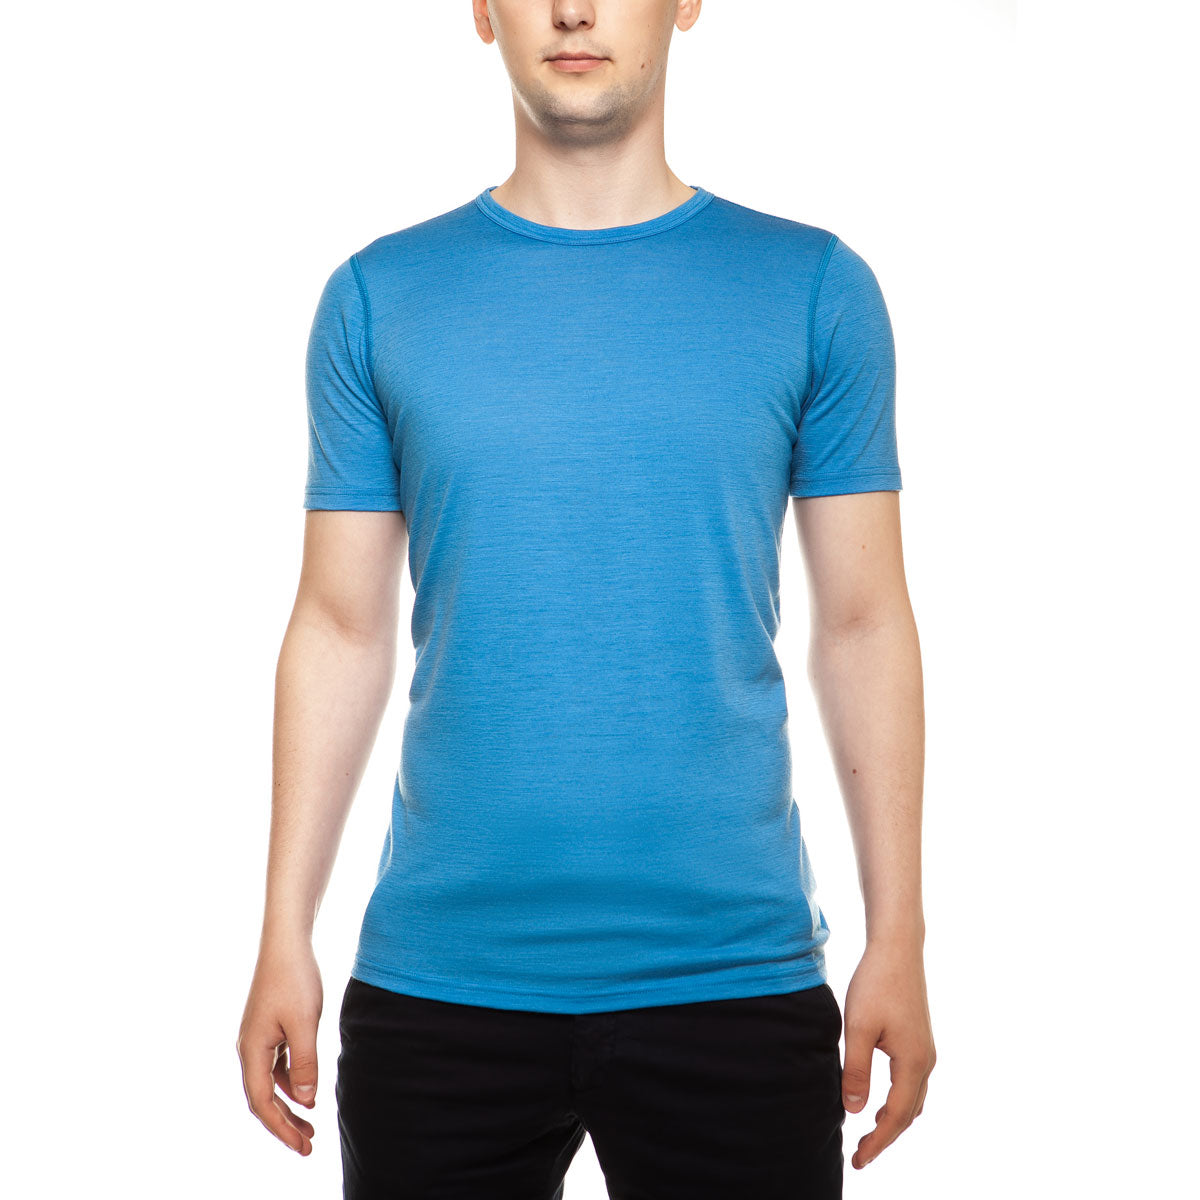 MENIQUE 100% Merino Wool Mens Shirt Light Blue